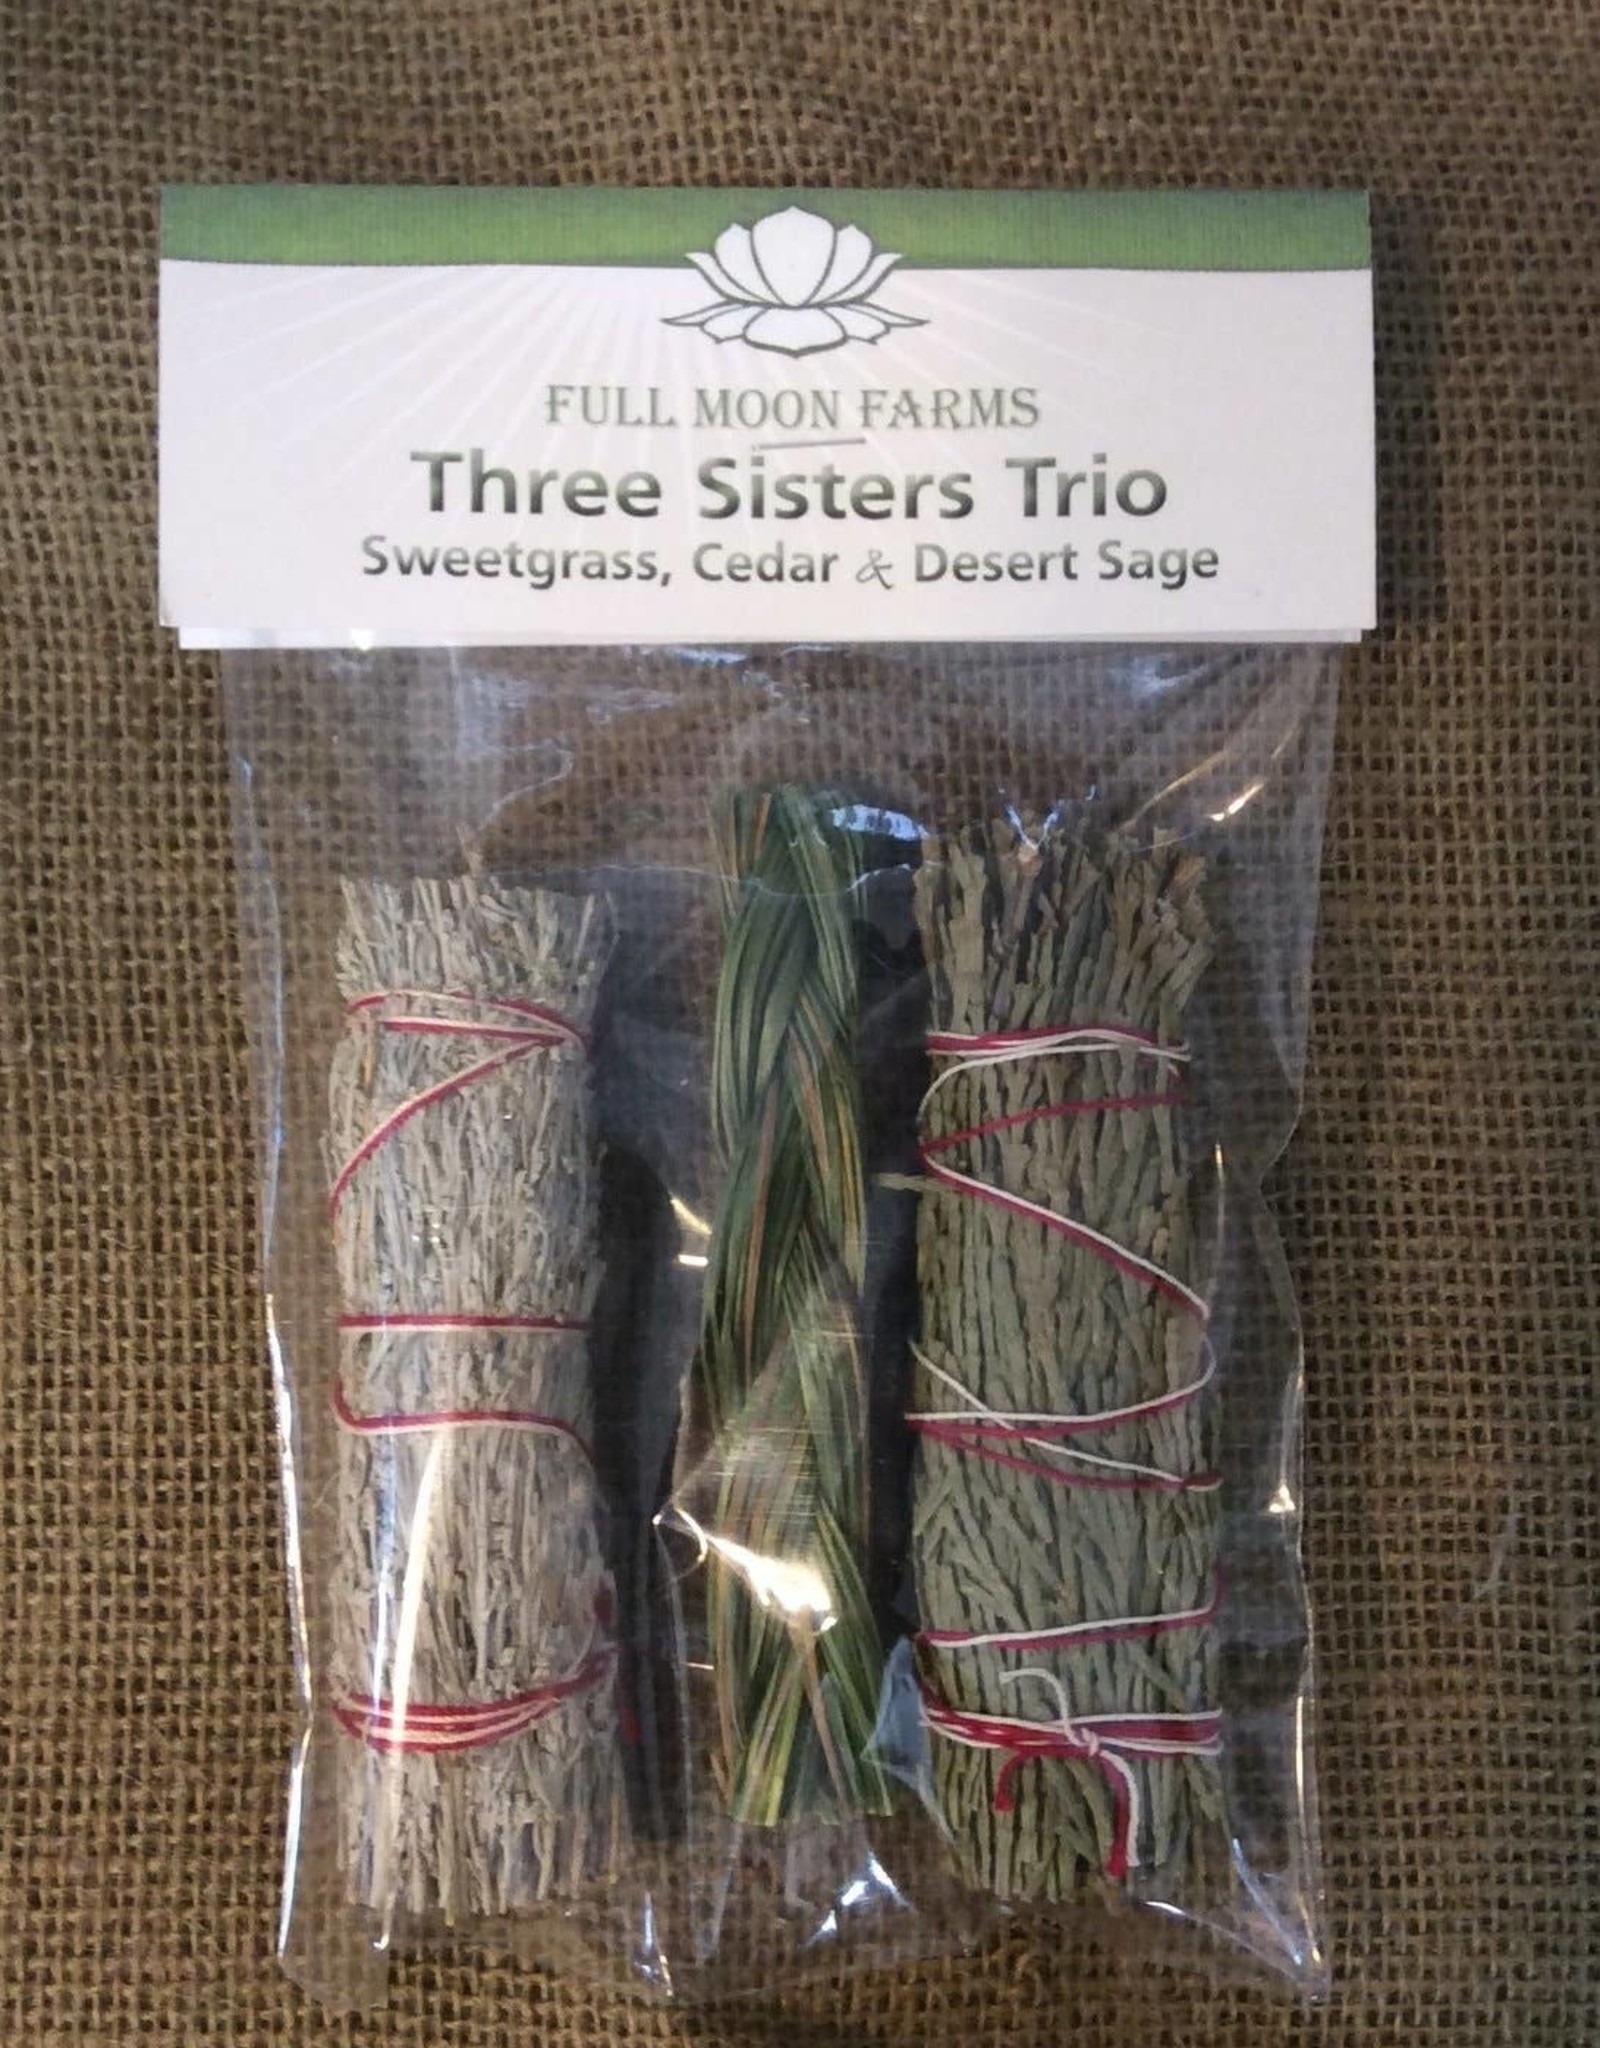 Full Moons Farms Three Sisters Trio | Sweetgrass, Cedar & Desert Sage